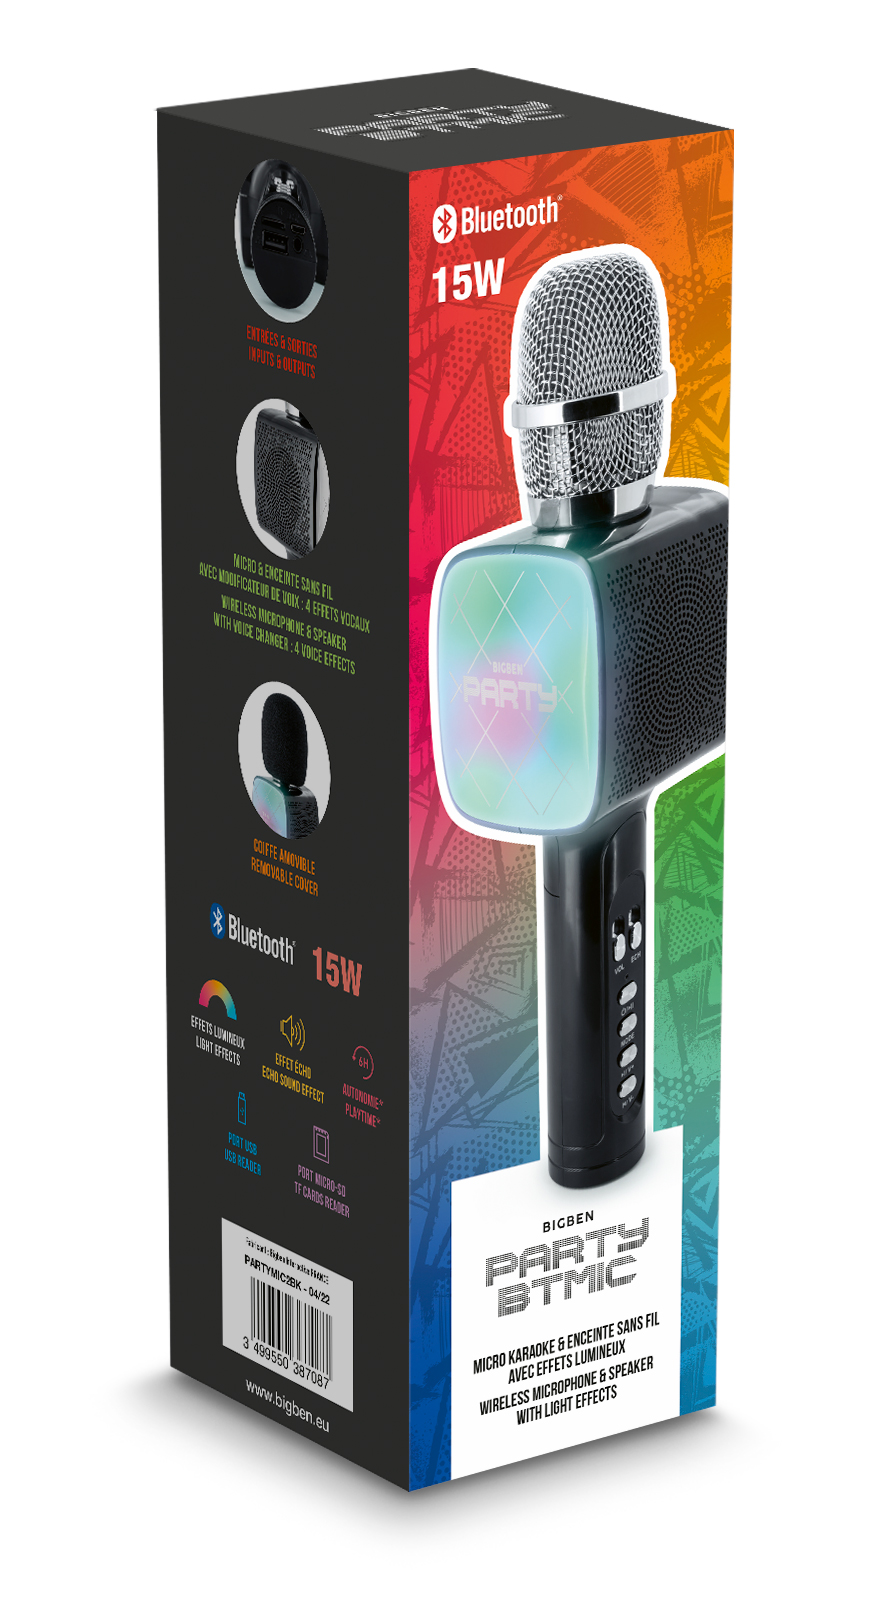 Karaoke Microphone – Wireless Microphone with Light effects